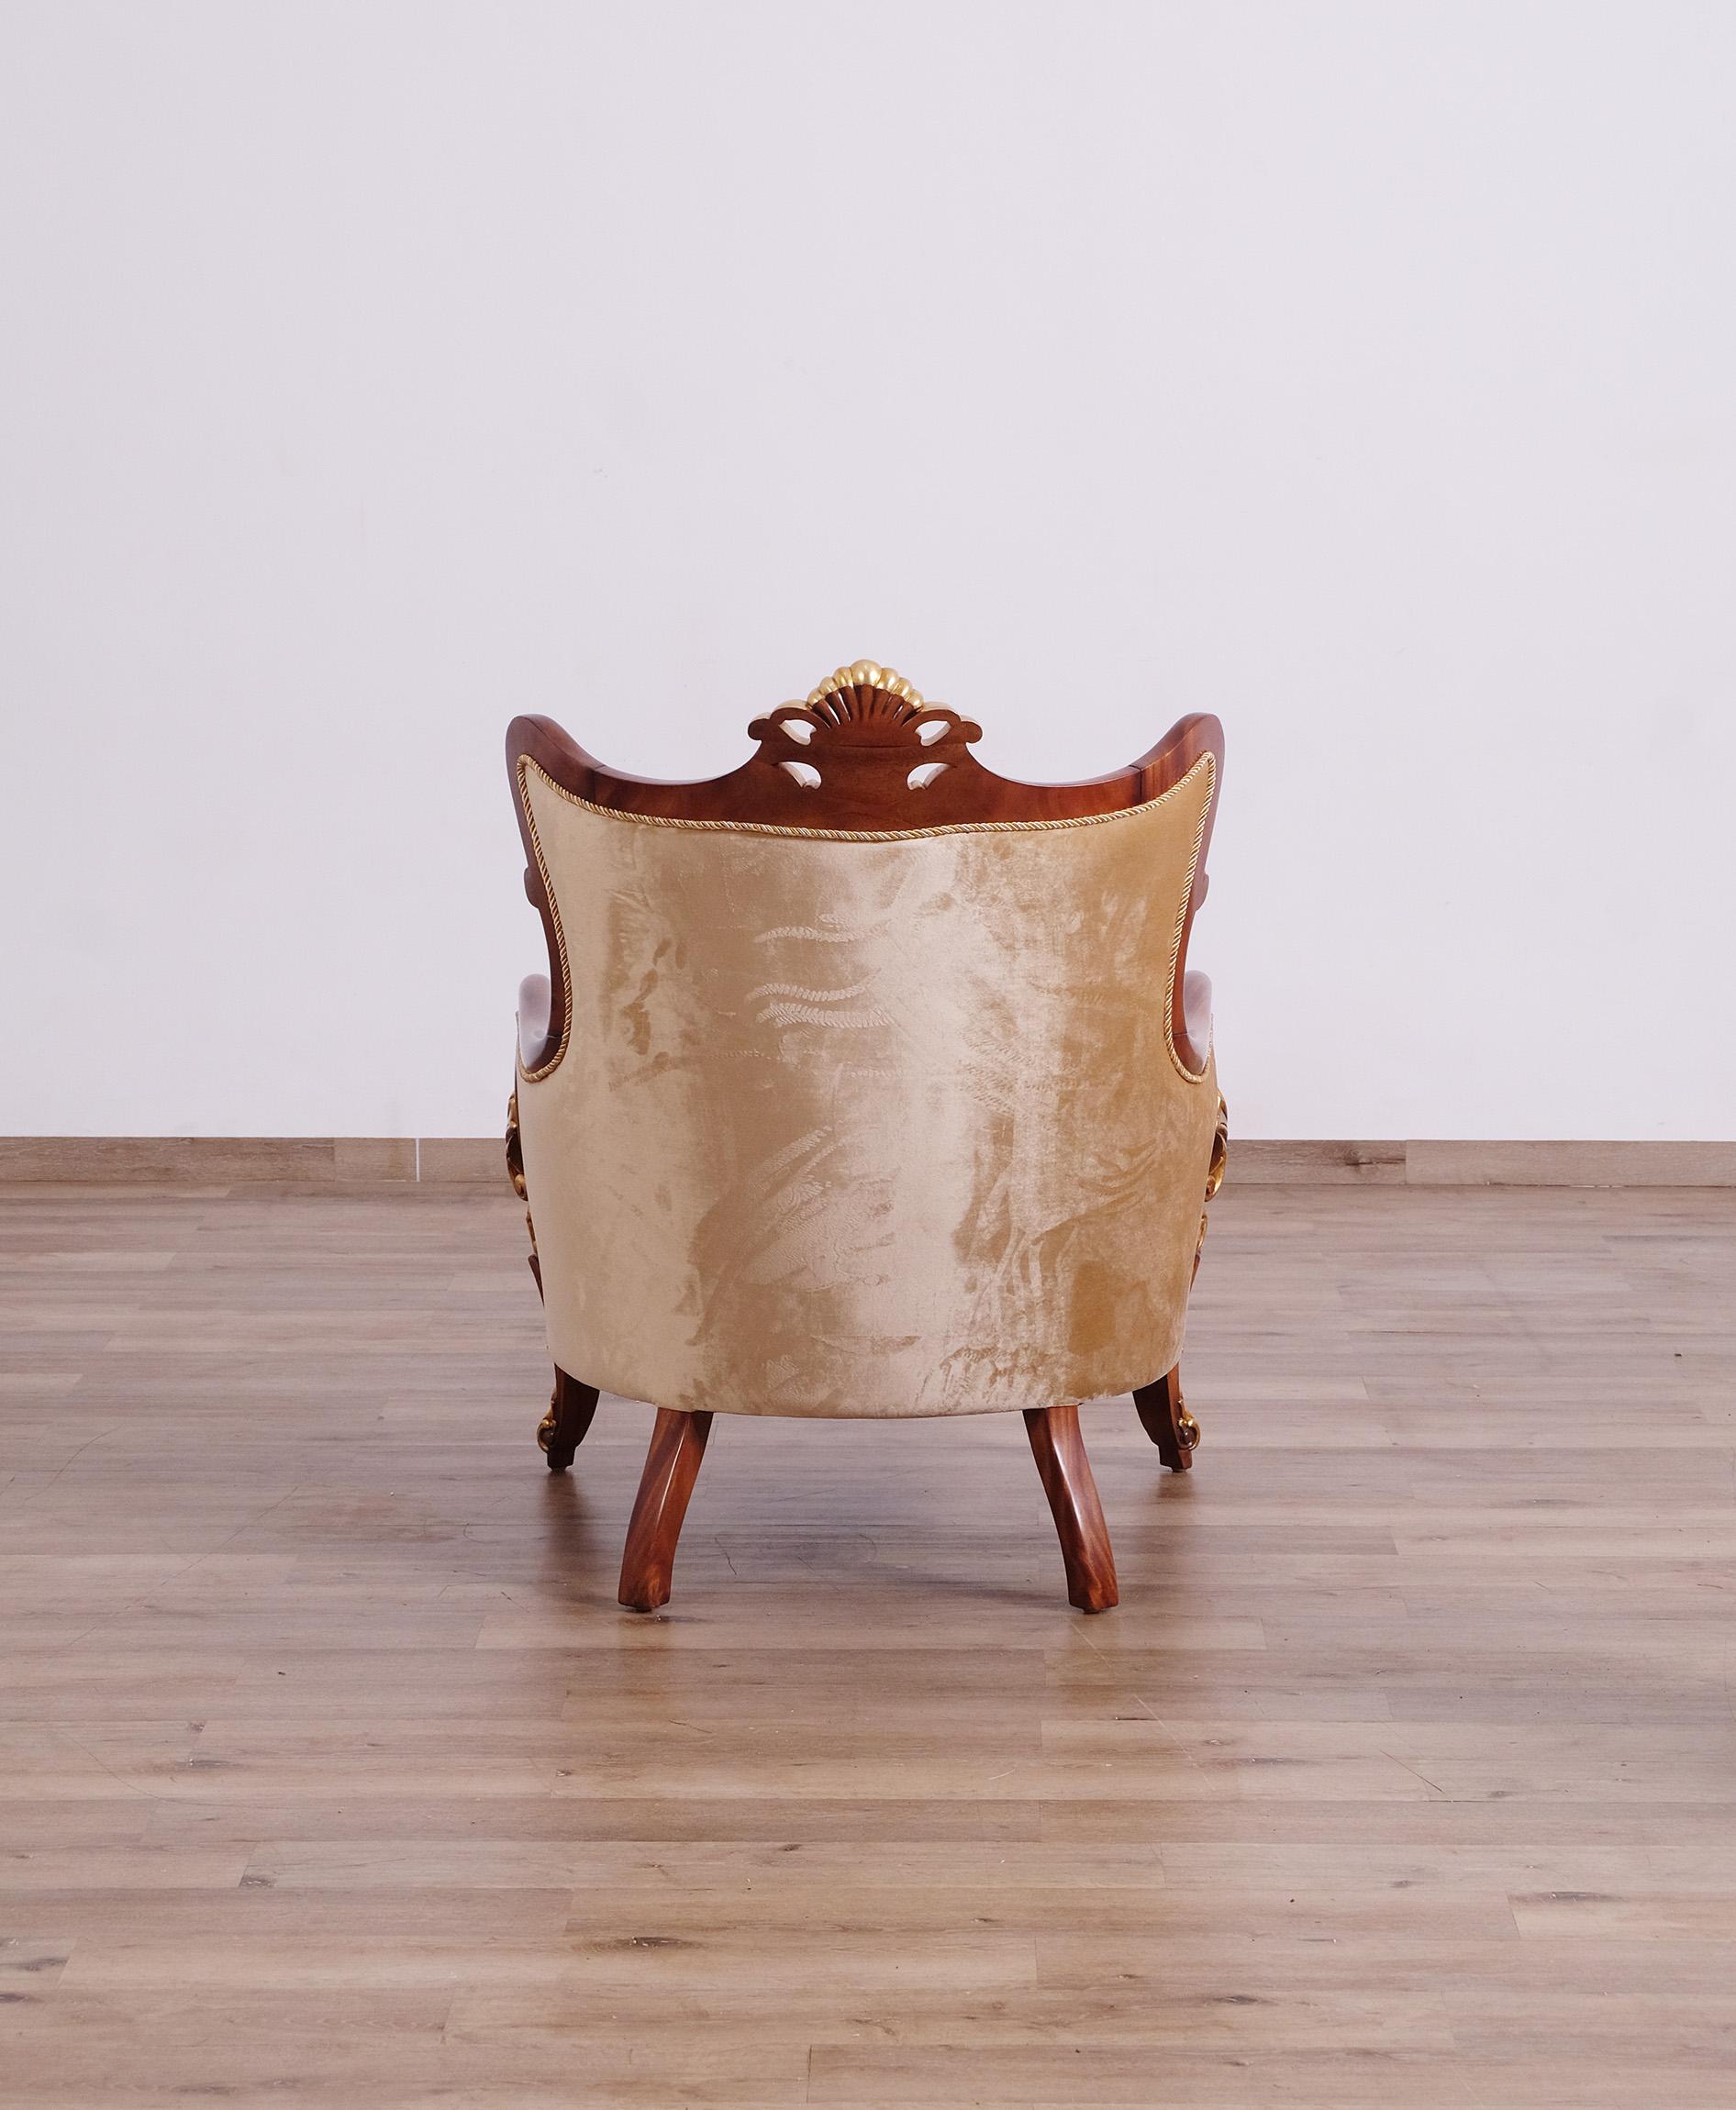 

    
Luxury Antique Walnut & Gold VERONICA Sofa Set 4Pcs EUROPEAN FURNITURE Traditional
